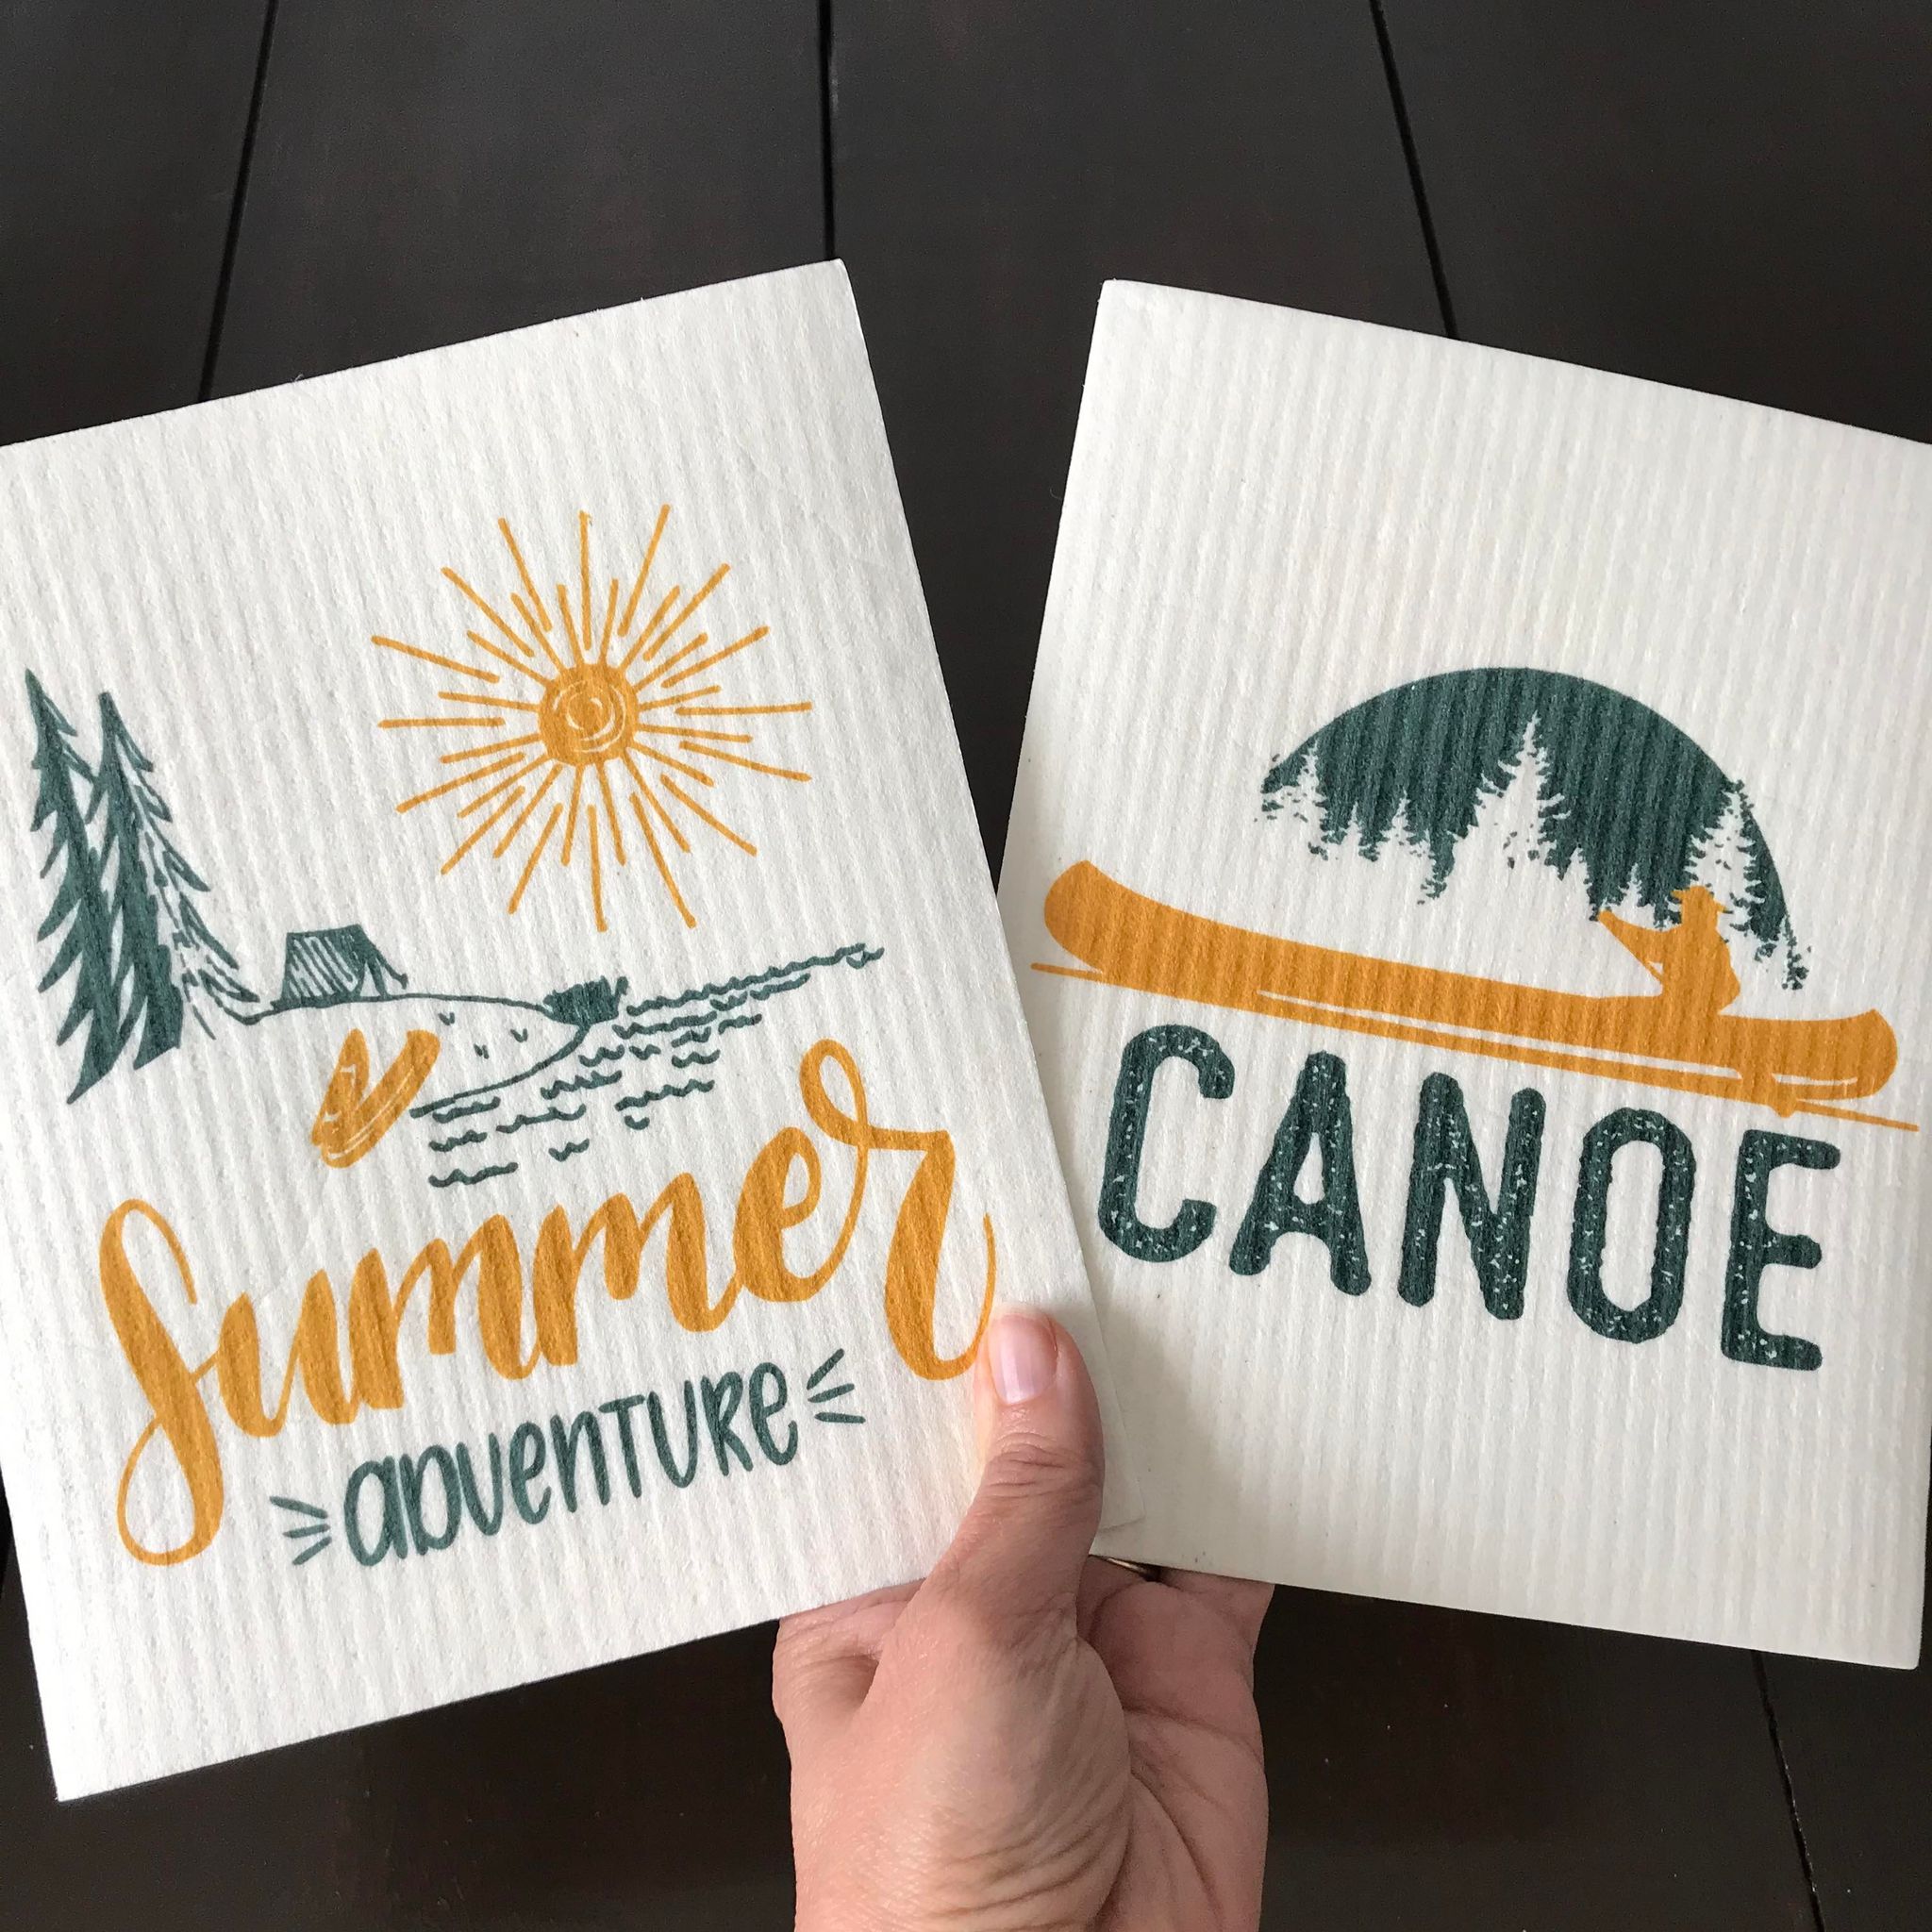 Summer adventure and Canoe themed Swedish  dishcloths